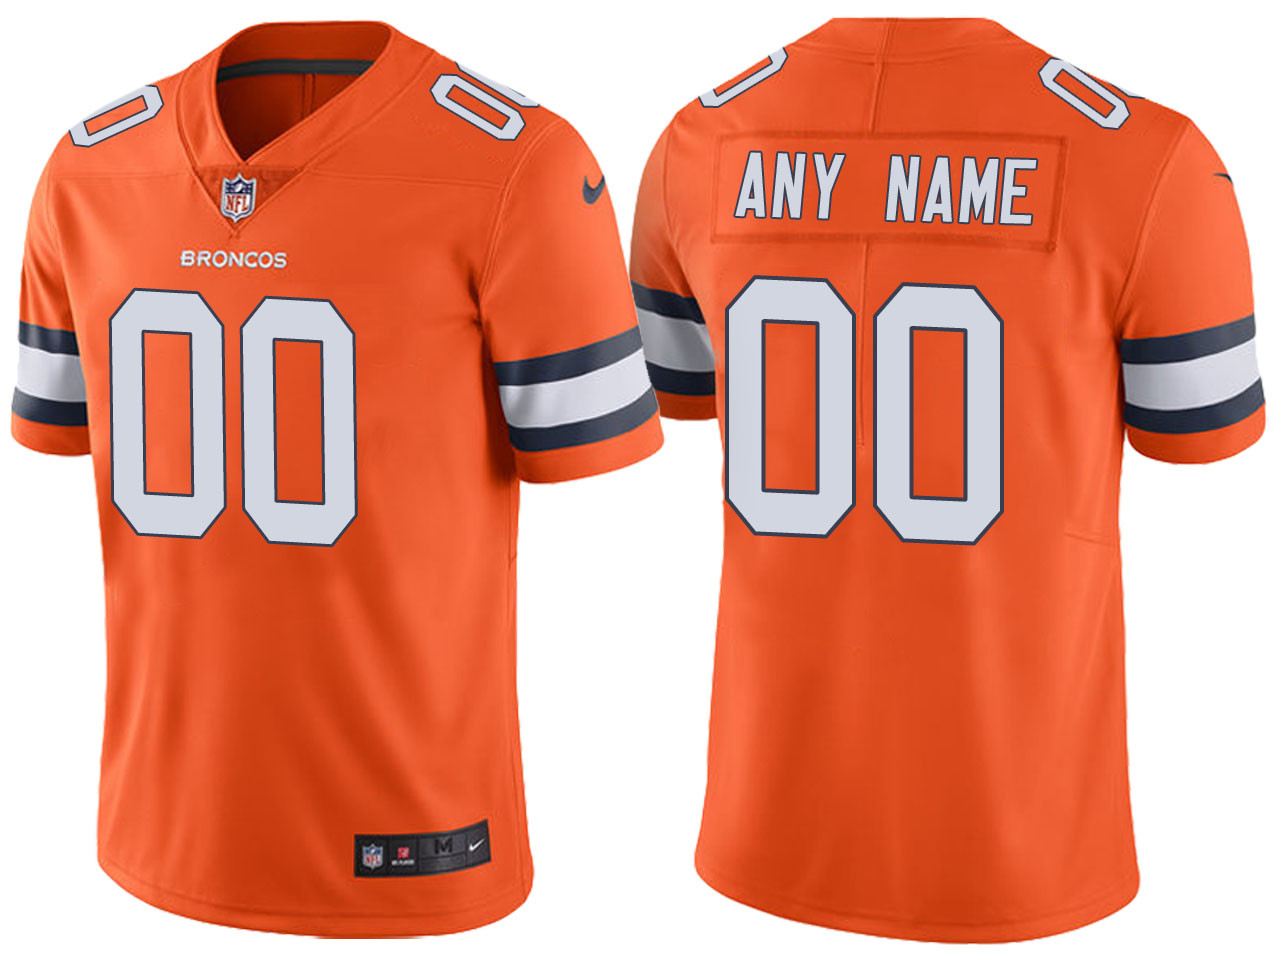 US$ 65 - Men's Nike NFL Denver Broncos Customized Orange Color Rush ...